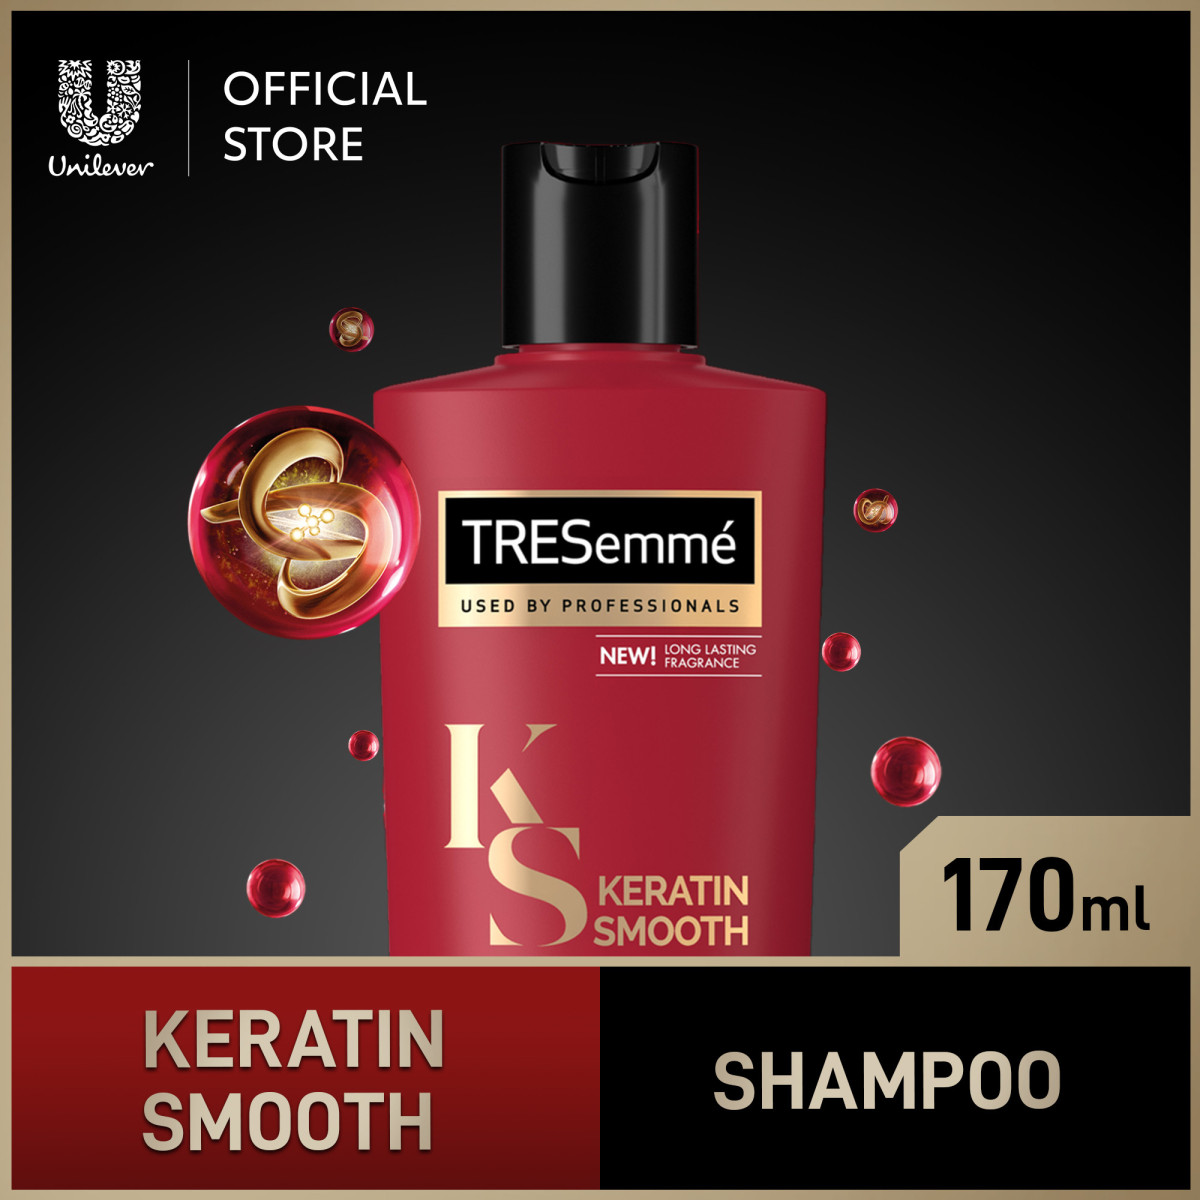 TRESemmé Keratin Smooth KERA10 Shampoo 170ml